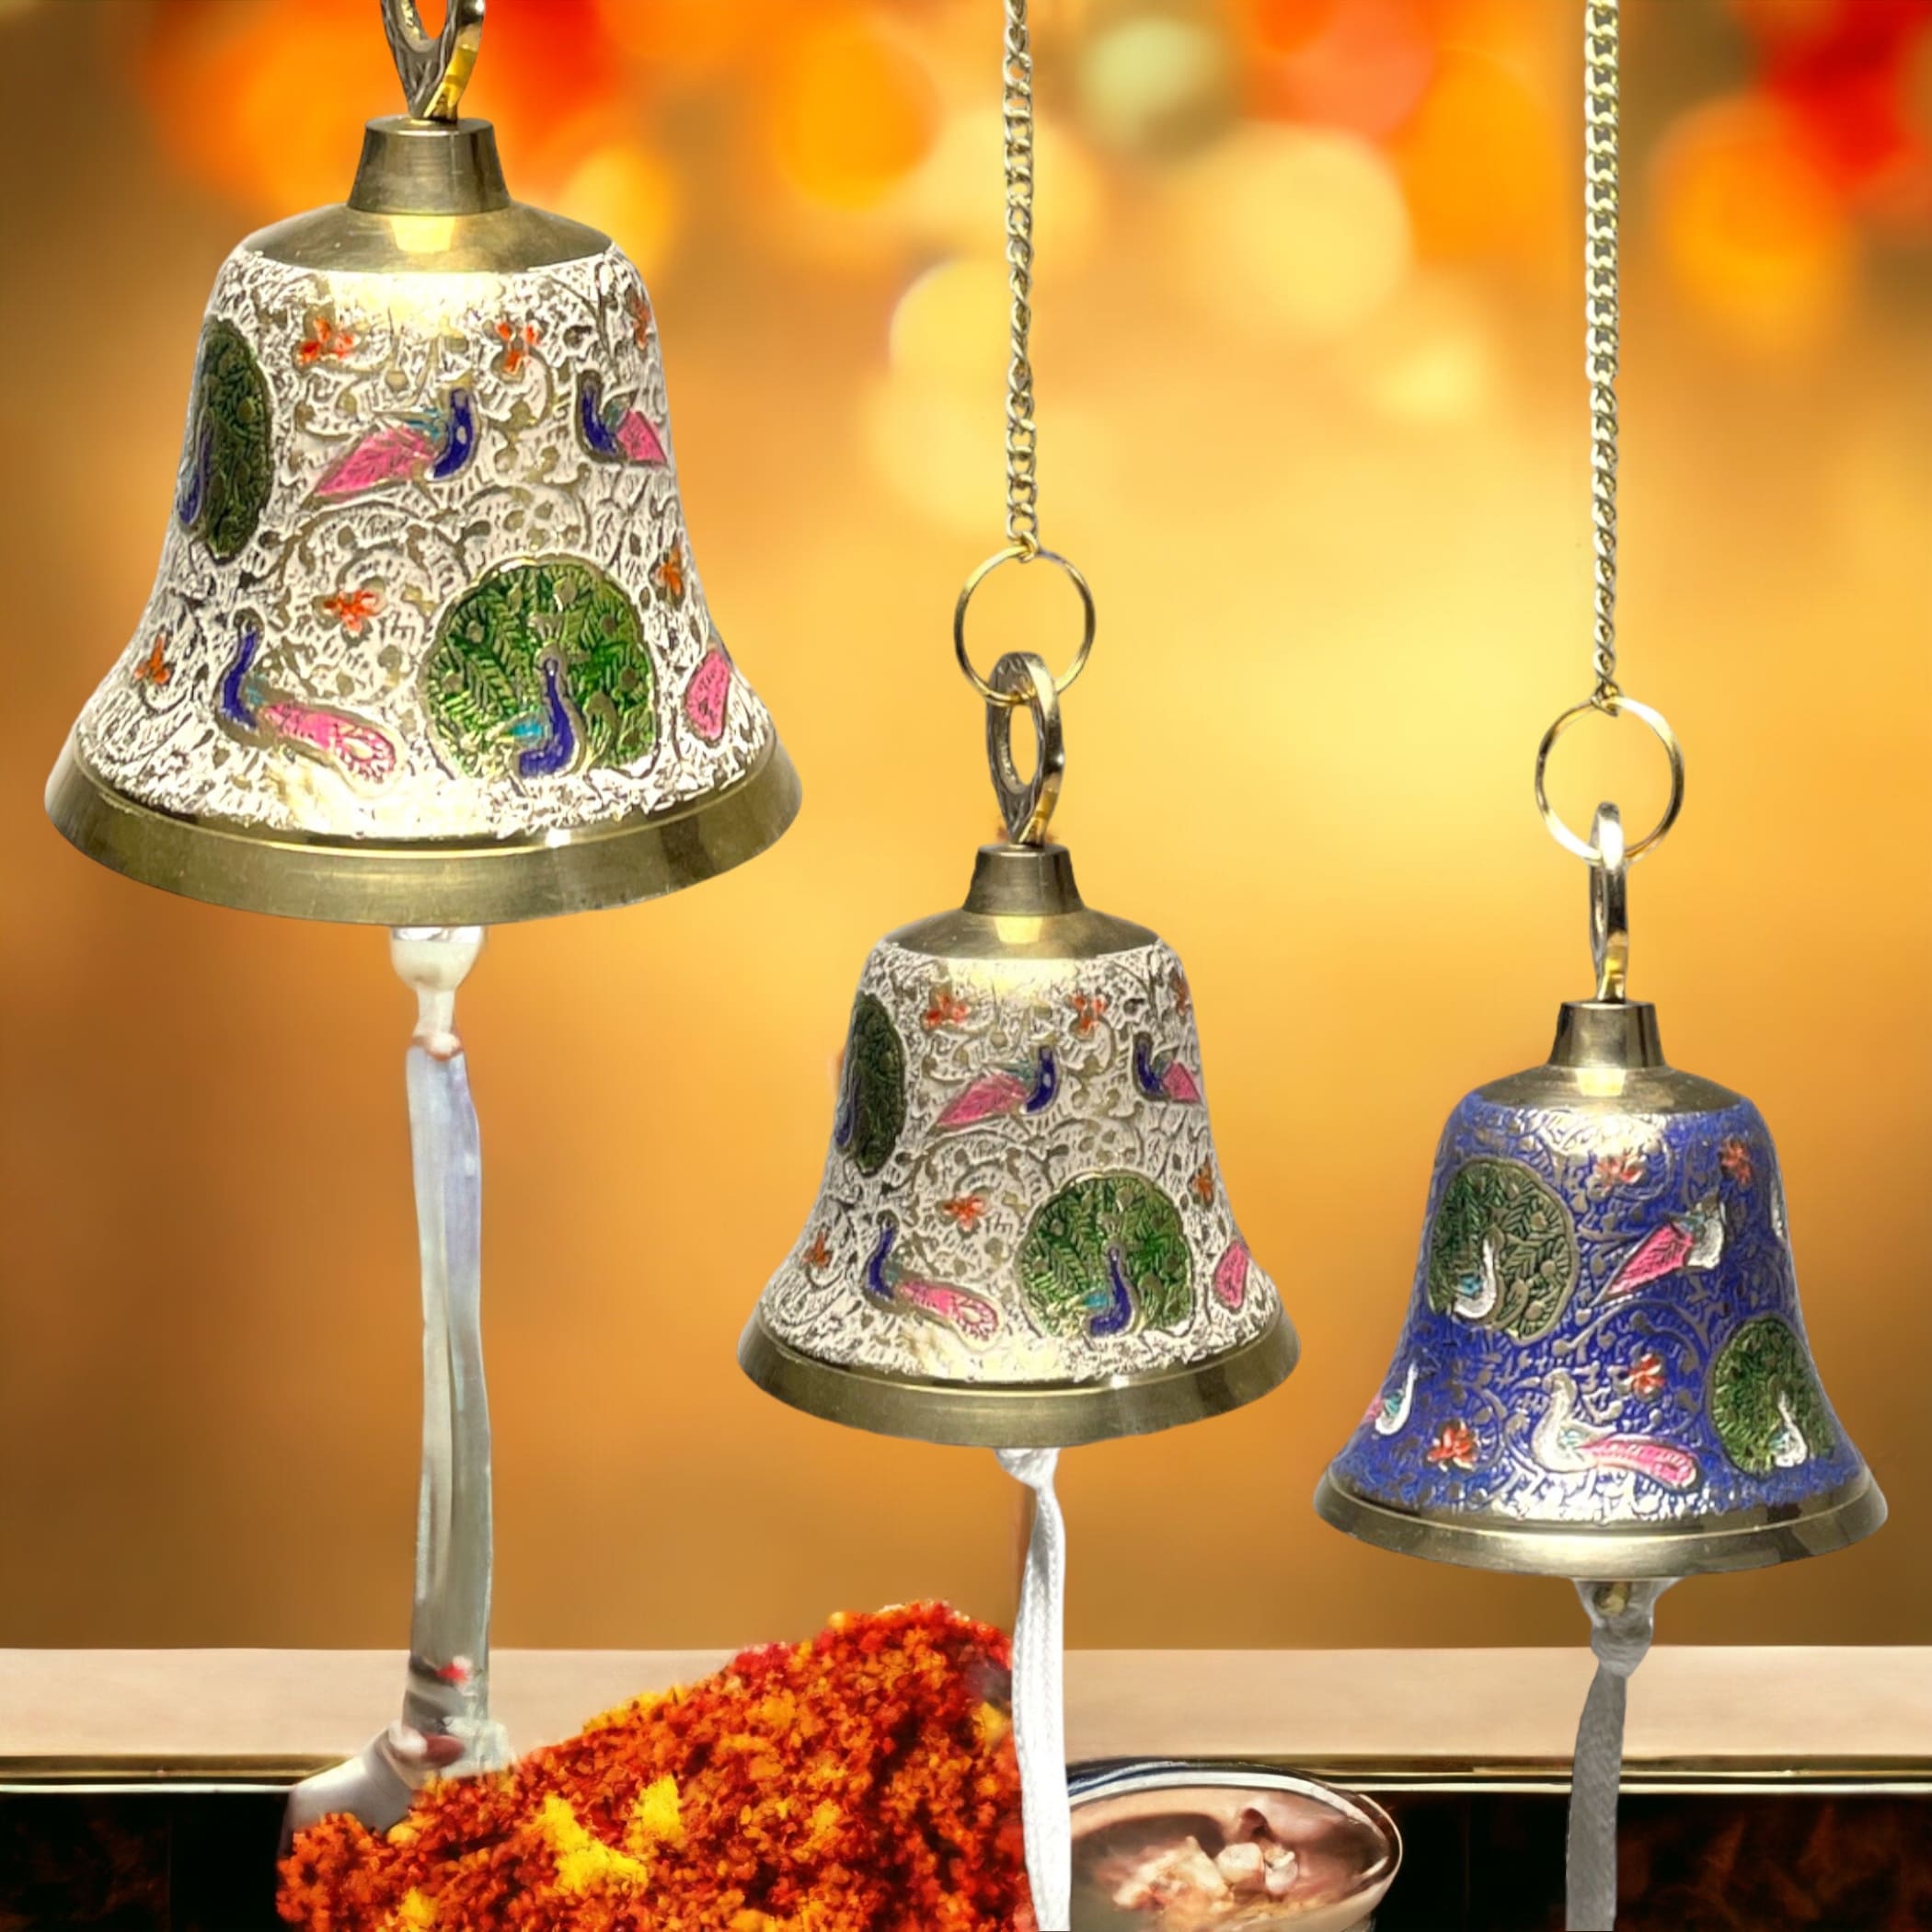 Hanging brass bell ganti indian pooja puja ghanti hindu